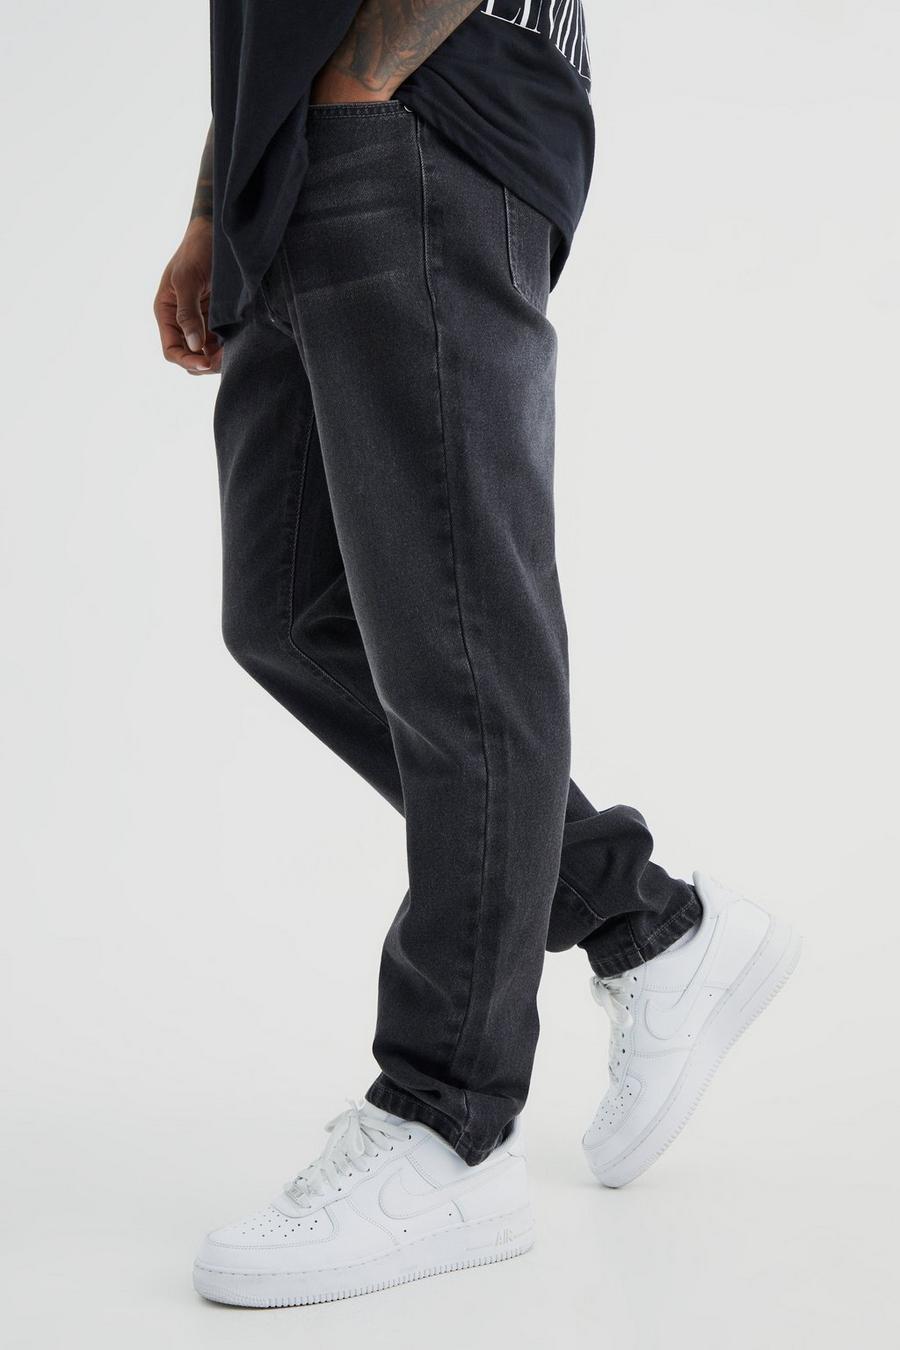 Slim Jeans, Charcoal